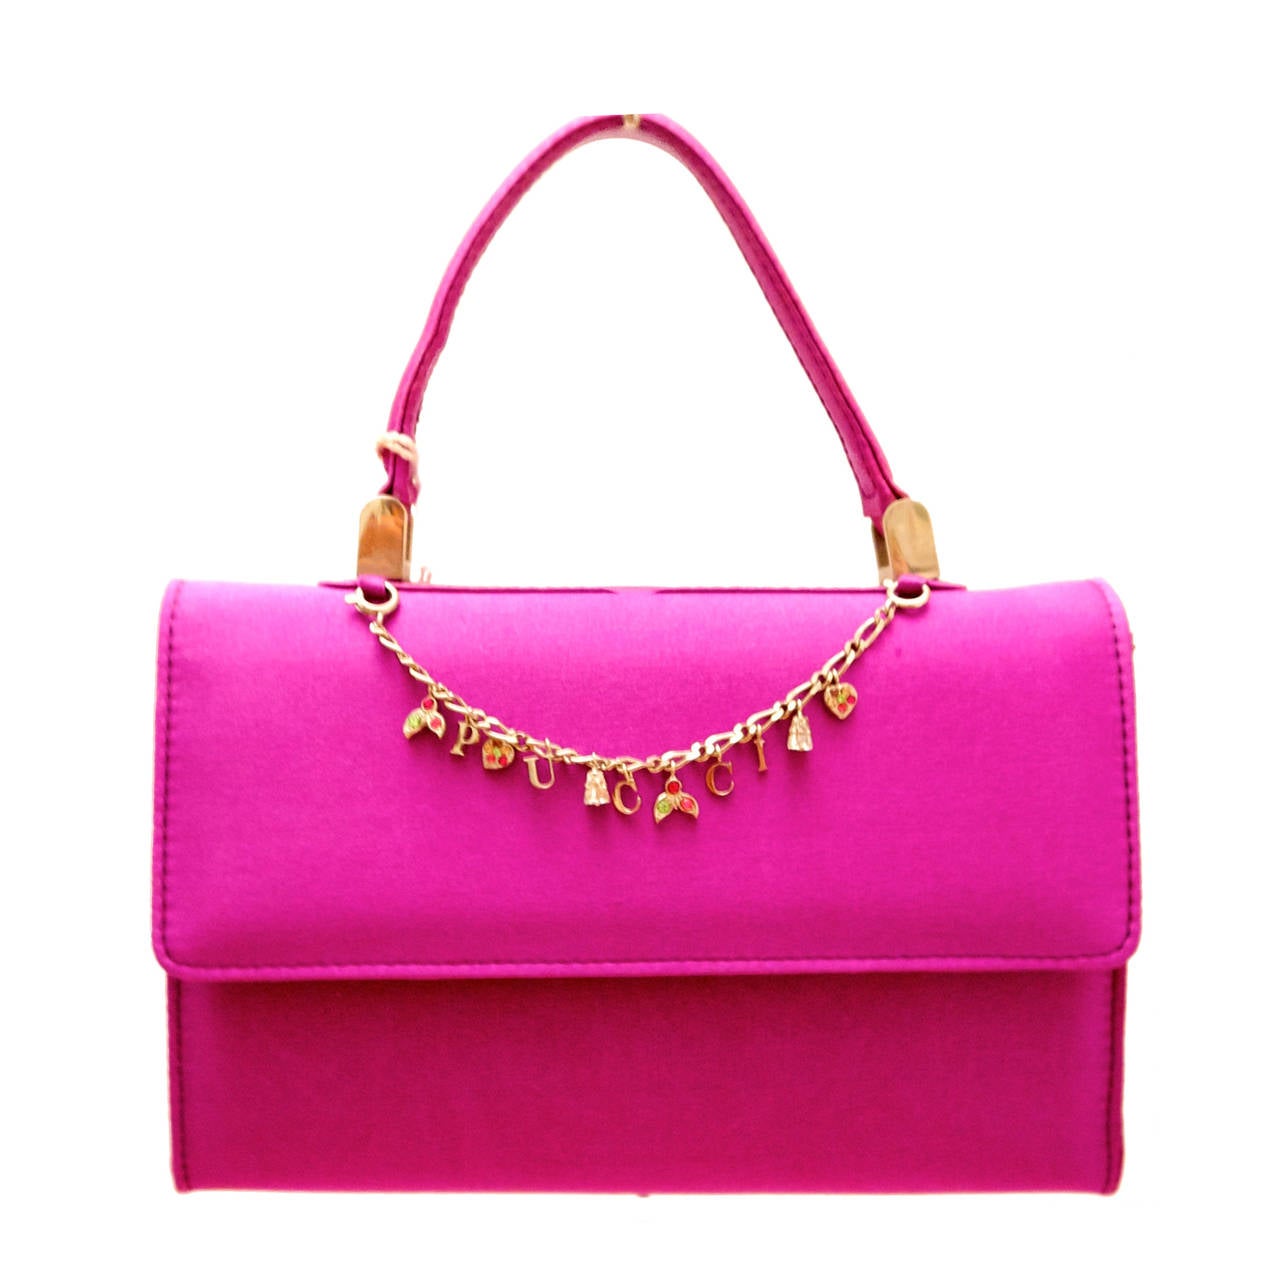 Emilio Pucci Fabric Runway Handbag with Chain of Charms - Fuchsia